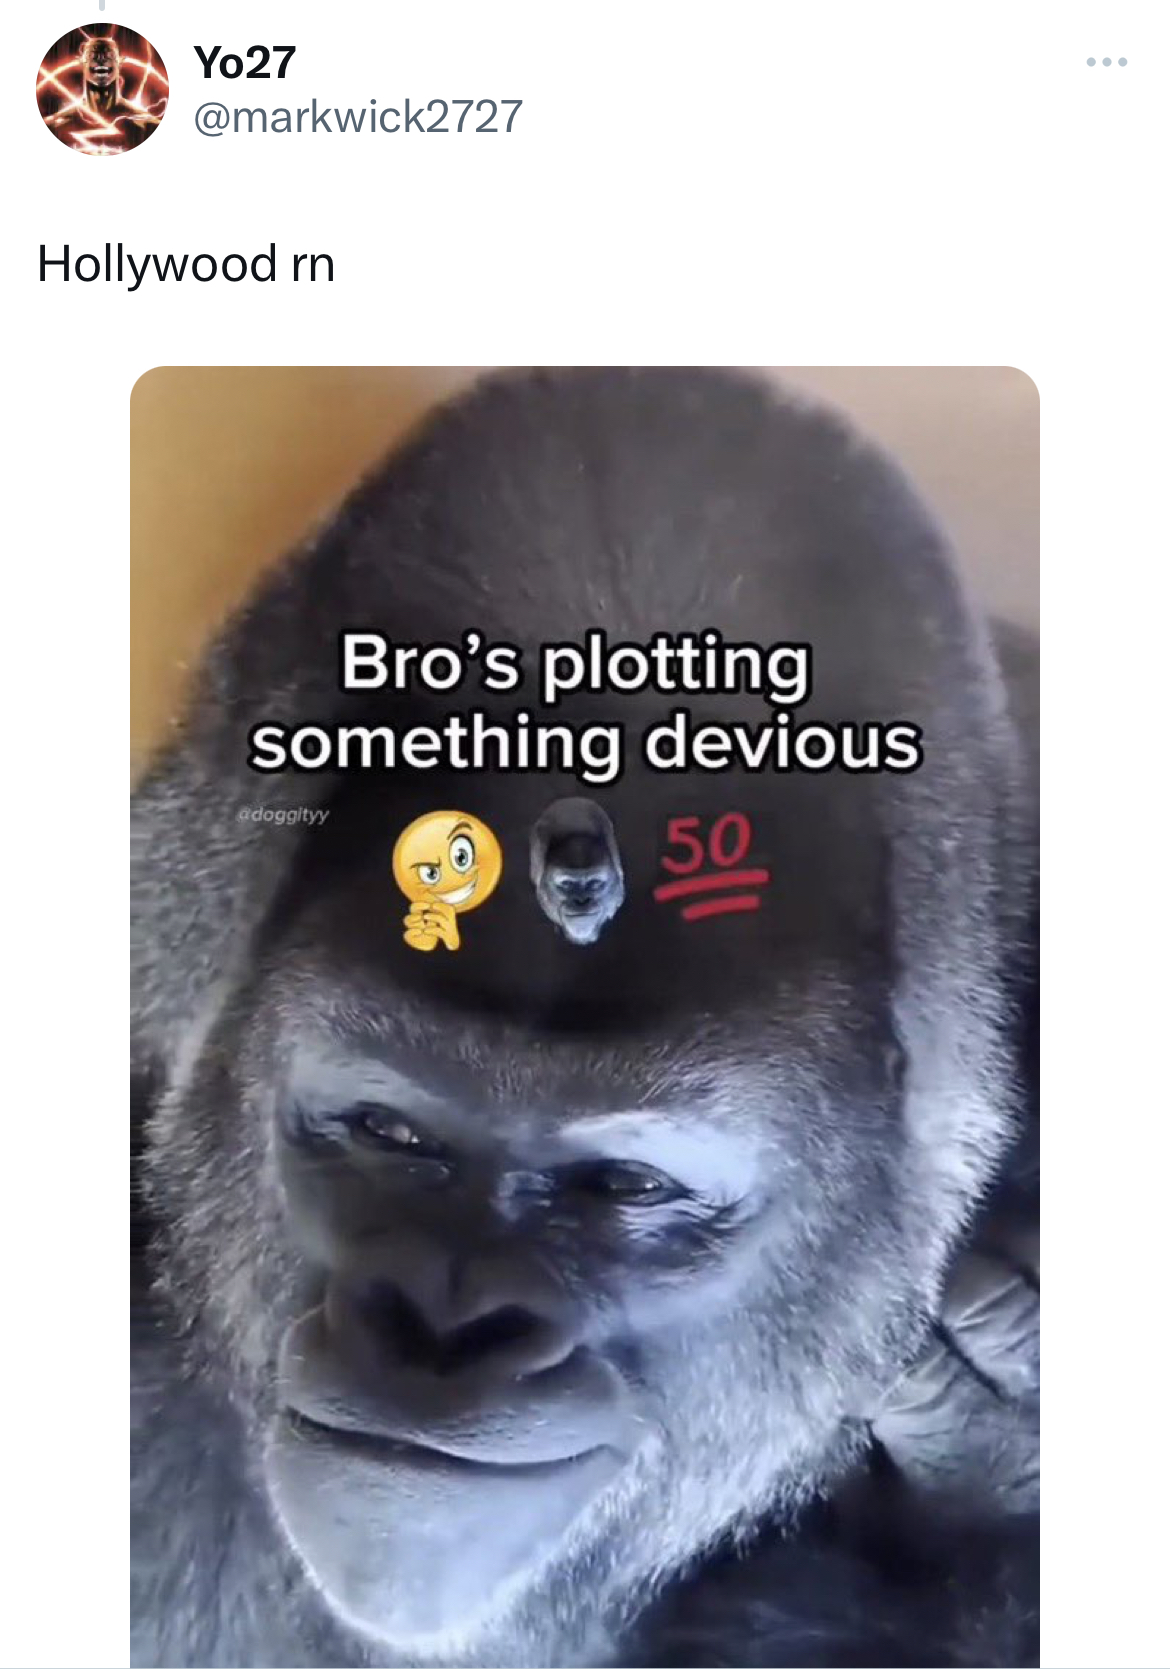 Ohio Cocaine Cat memes - head - Yo27 Hollywood rn Bro's plotting something devious 50 paty B